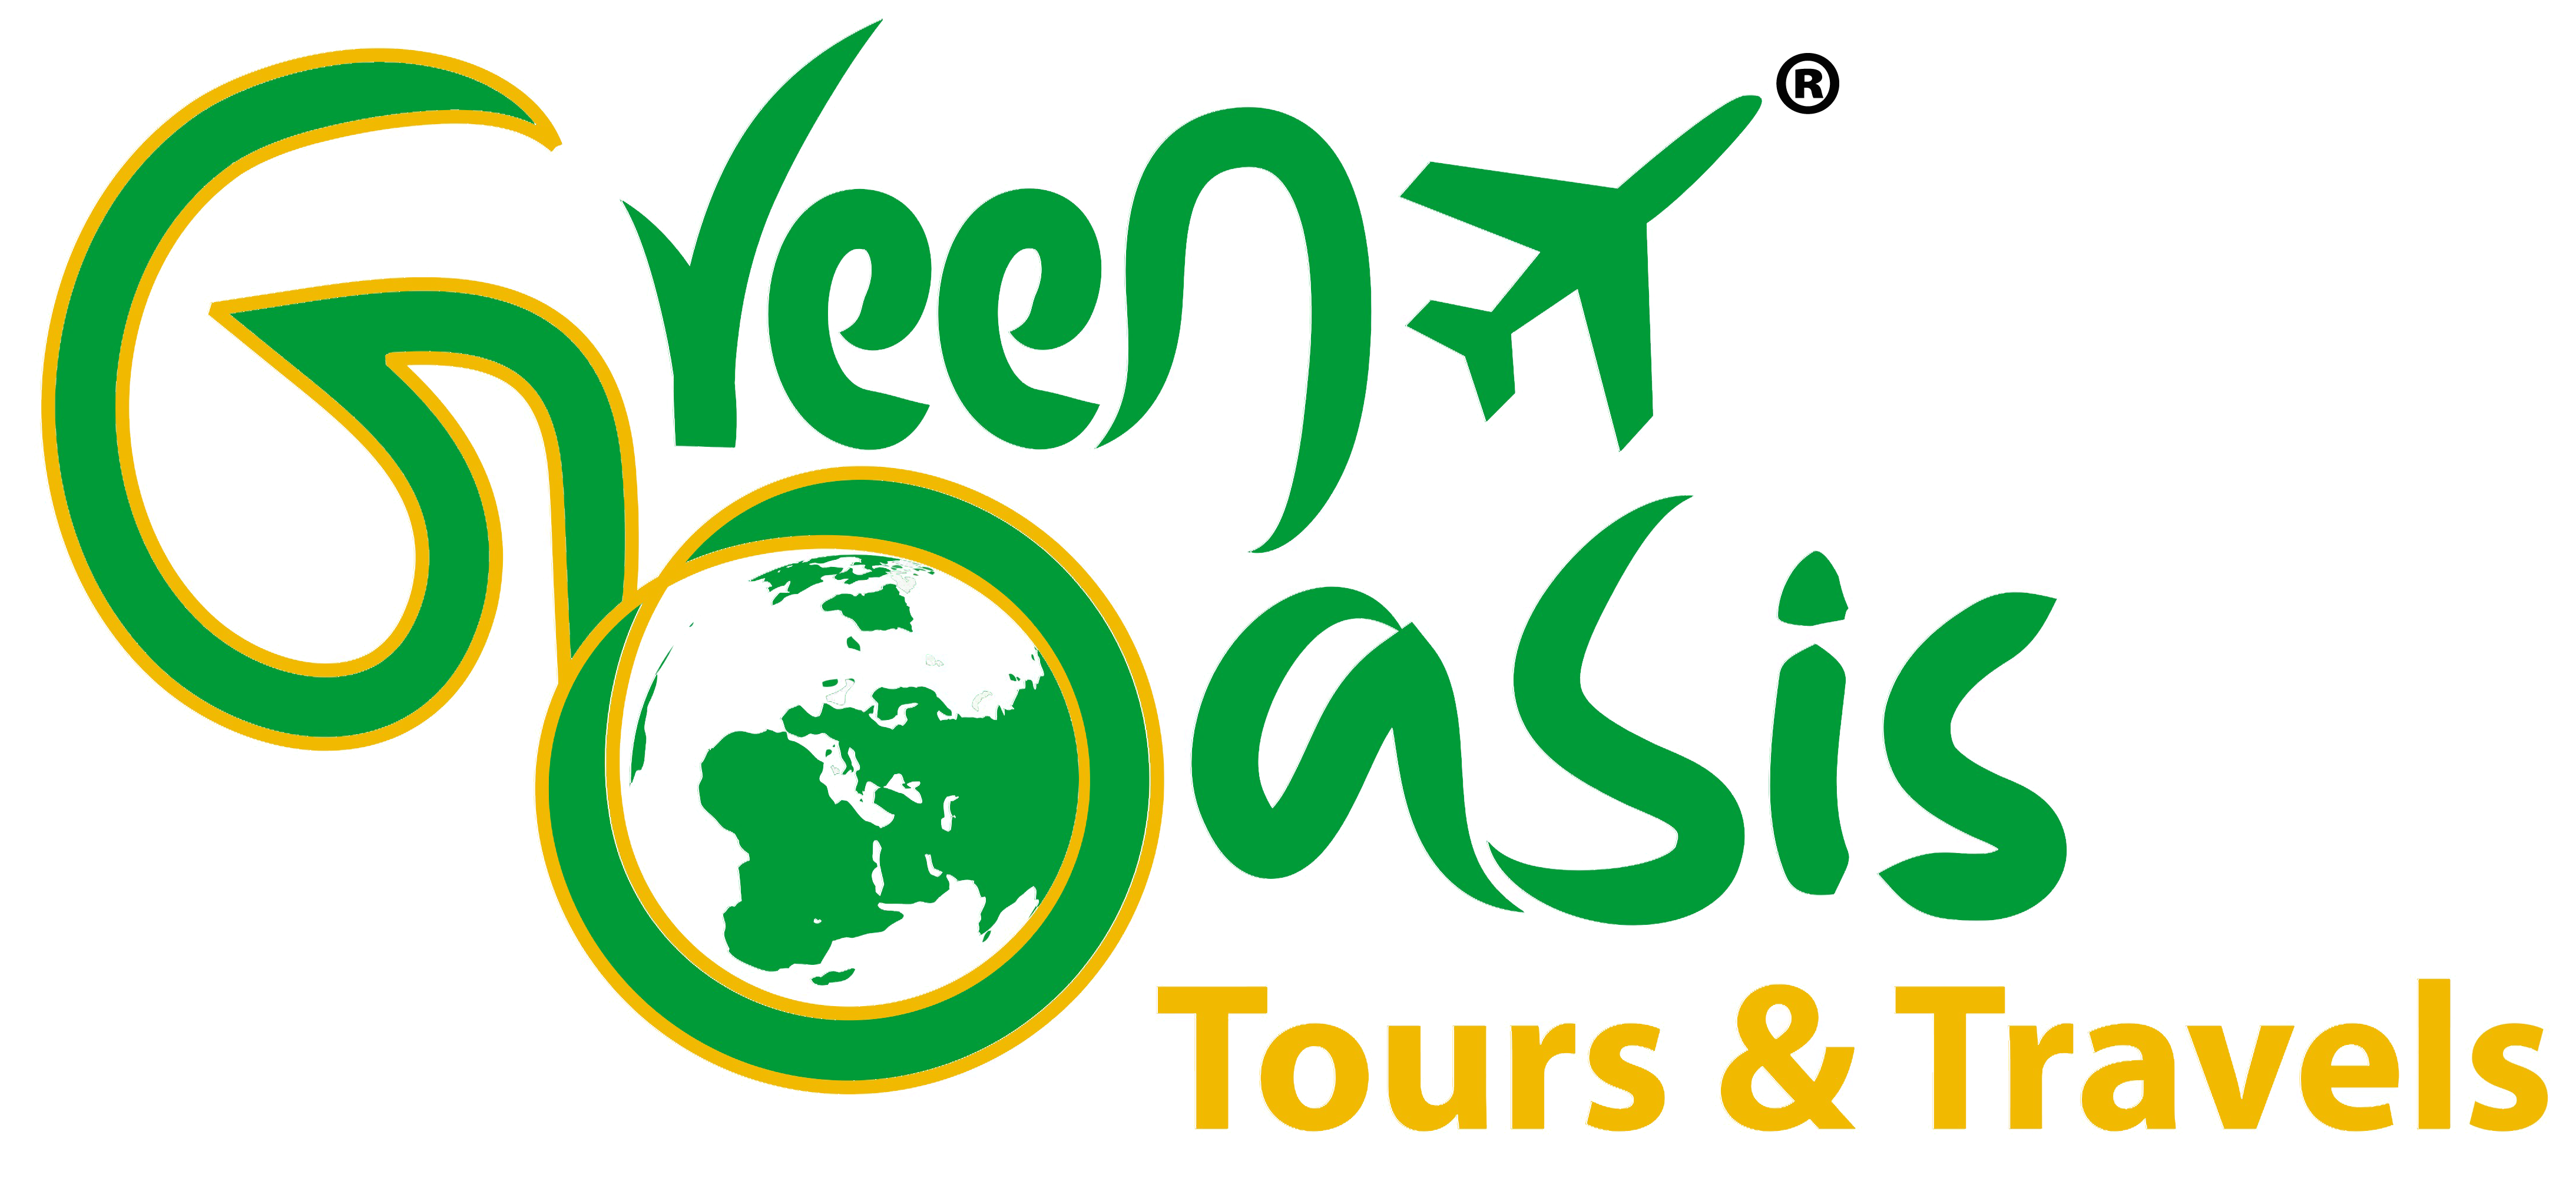 Green Oasis Tours & Travel Services Pvt Ltd